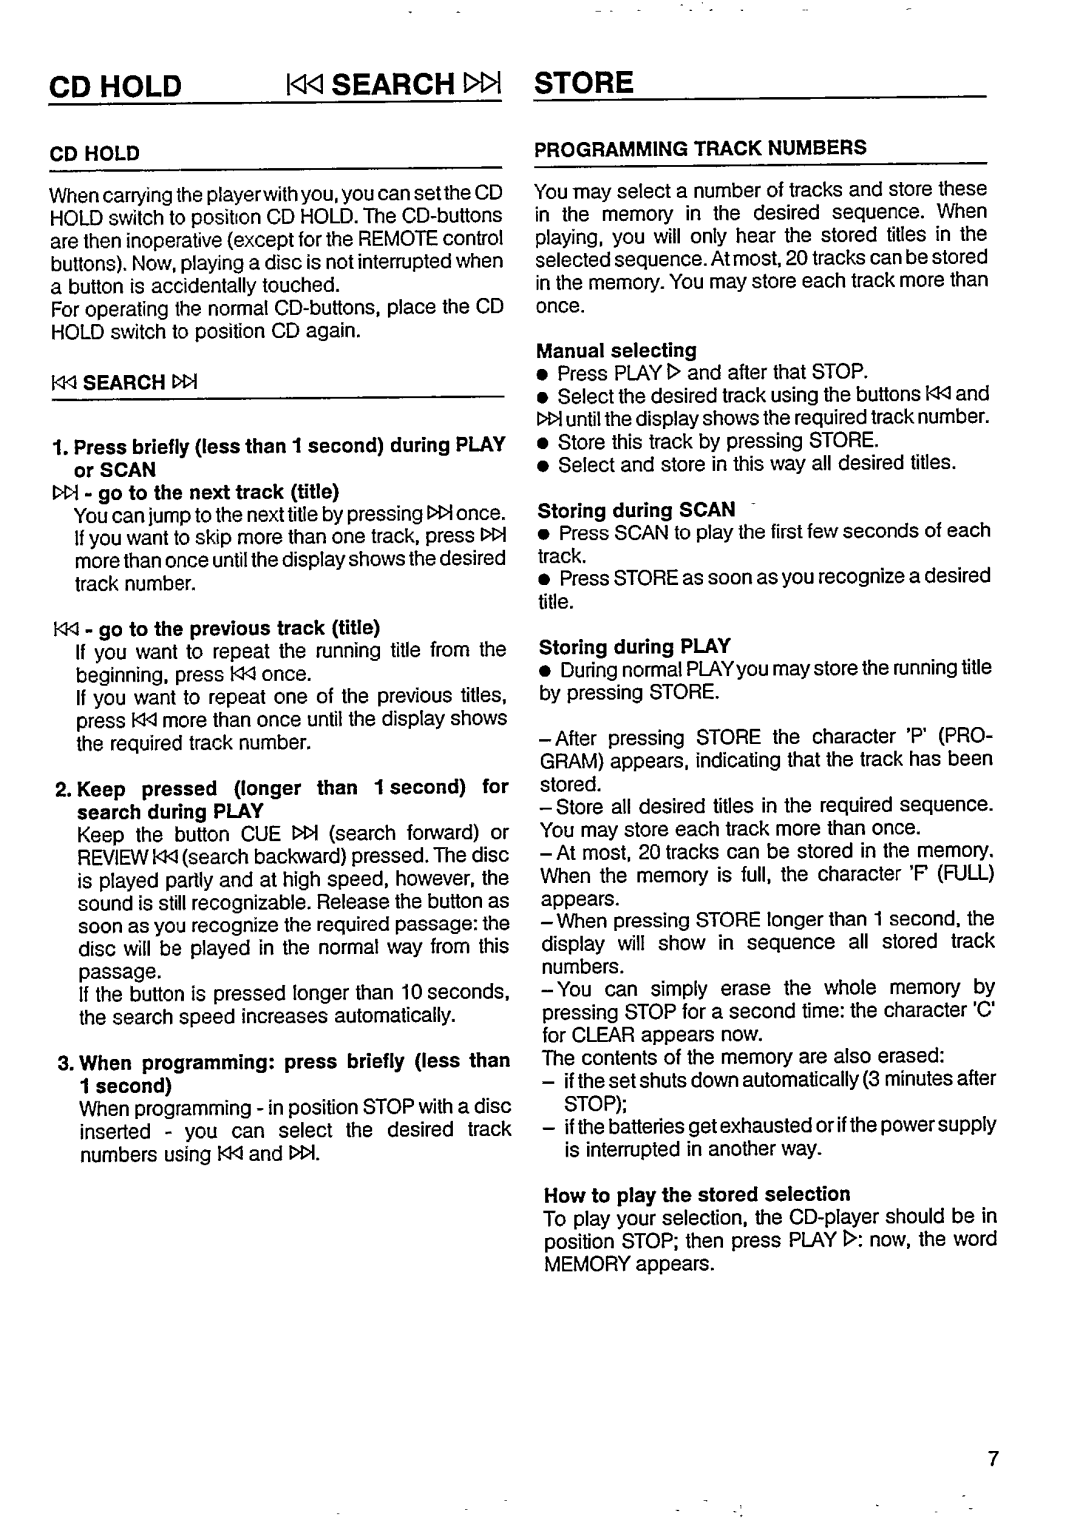 Philips AZ 6892 manual 